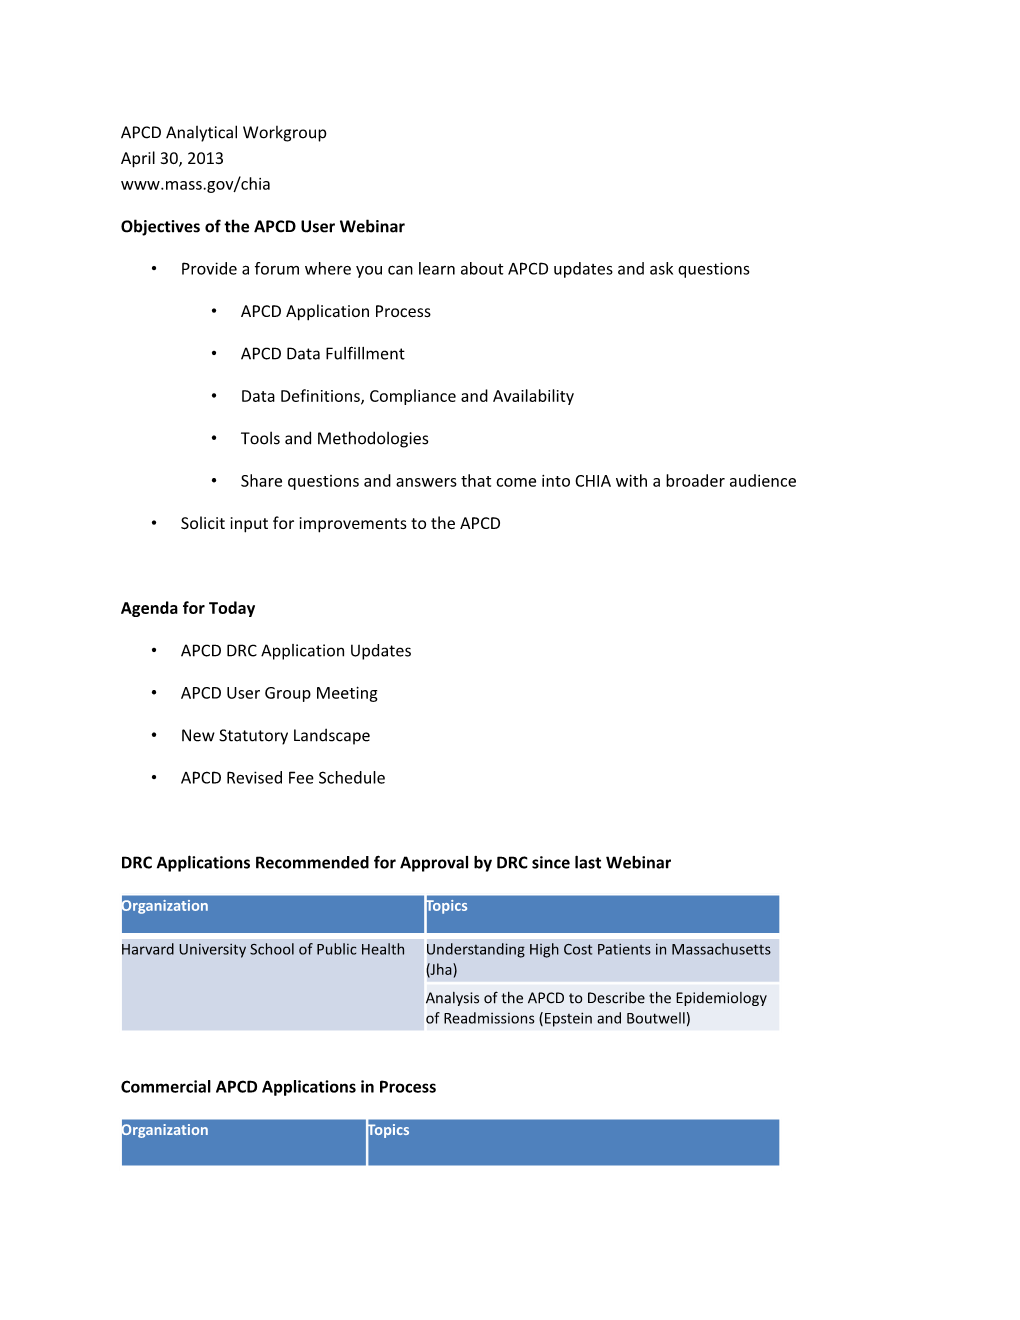 Objectives of the APCD User Webinar